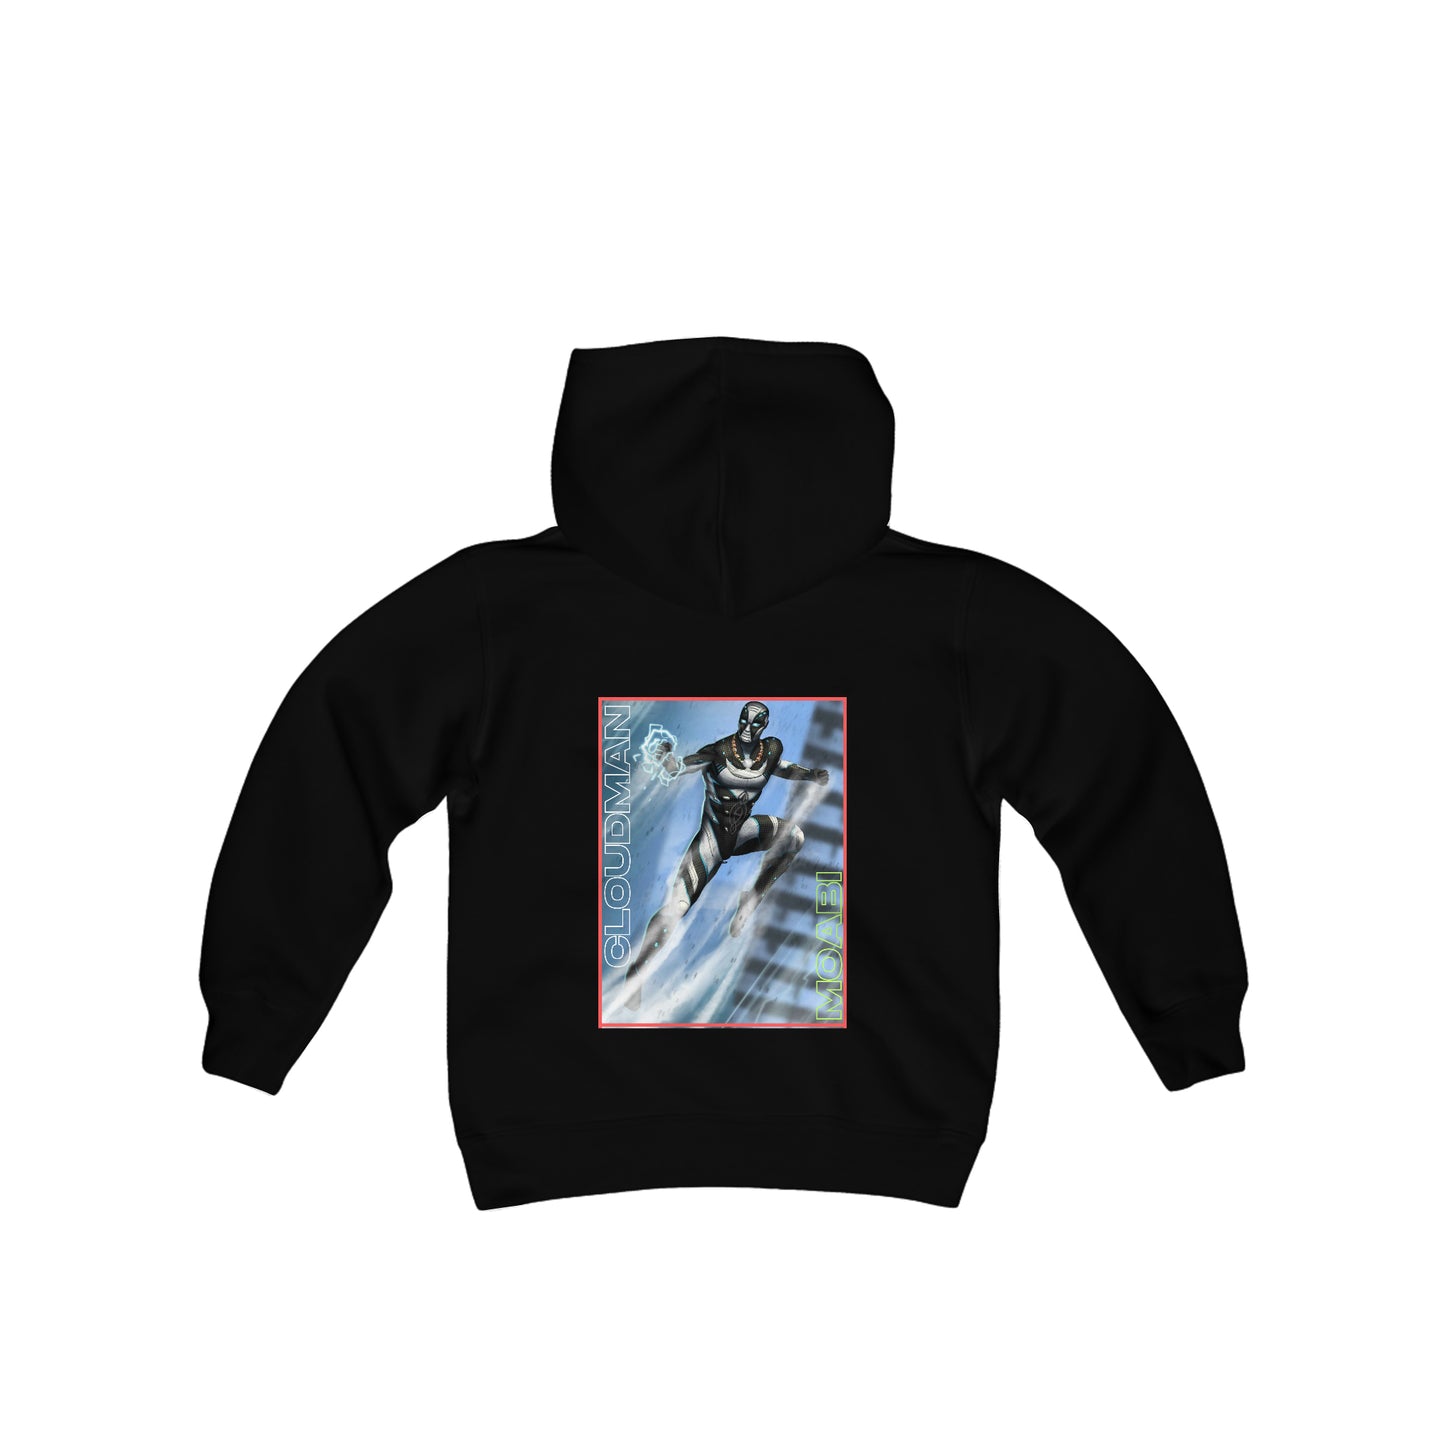 Cloudman  - Boys - Heavy Blend Hooded Sweatshirt  -  Front & Back designs